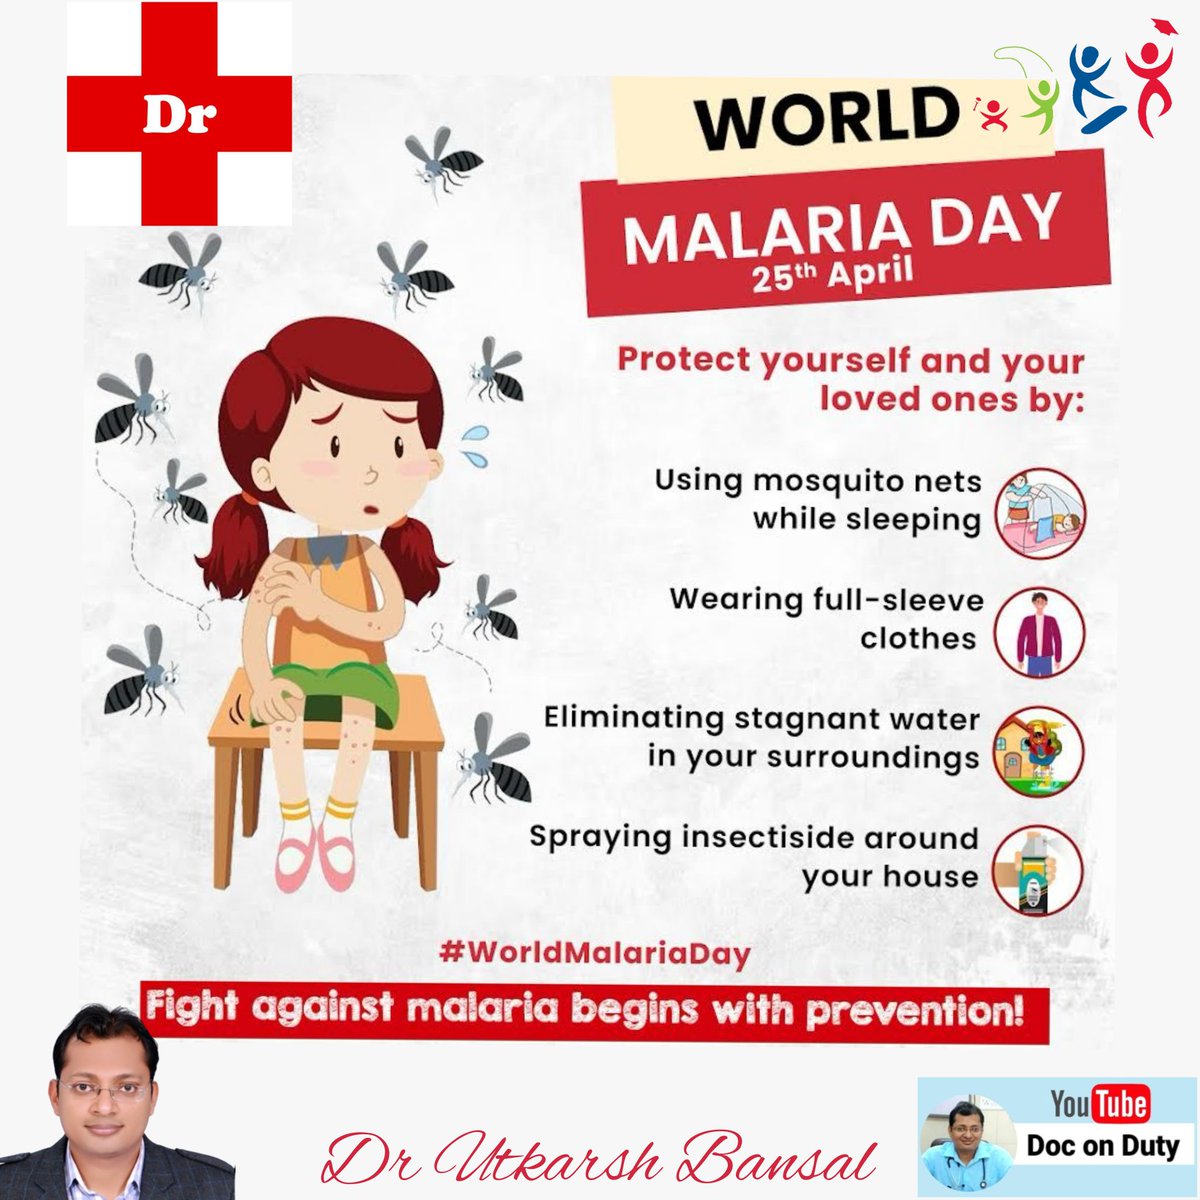 #DrUtkarshBansal #OmChildCareAndVaccinationClinic #DocOnDuty #Pediatrician #ChildDoctor #BabyDoctor #InfantDoctor #TeenDoctor #Health #ChildHealth #ChildCare #HealthTips #ReadTheLabels #ParentalAwareness #𝐖𝐎𝐑𝐋𝐃𝐌𝐀𝐋𝐀𝐑𝐈𝐀𝐃𝐀𝐘 
#MalariaDay #EndMalaria #MalariaFreeWorld